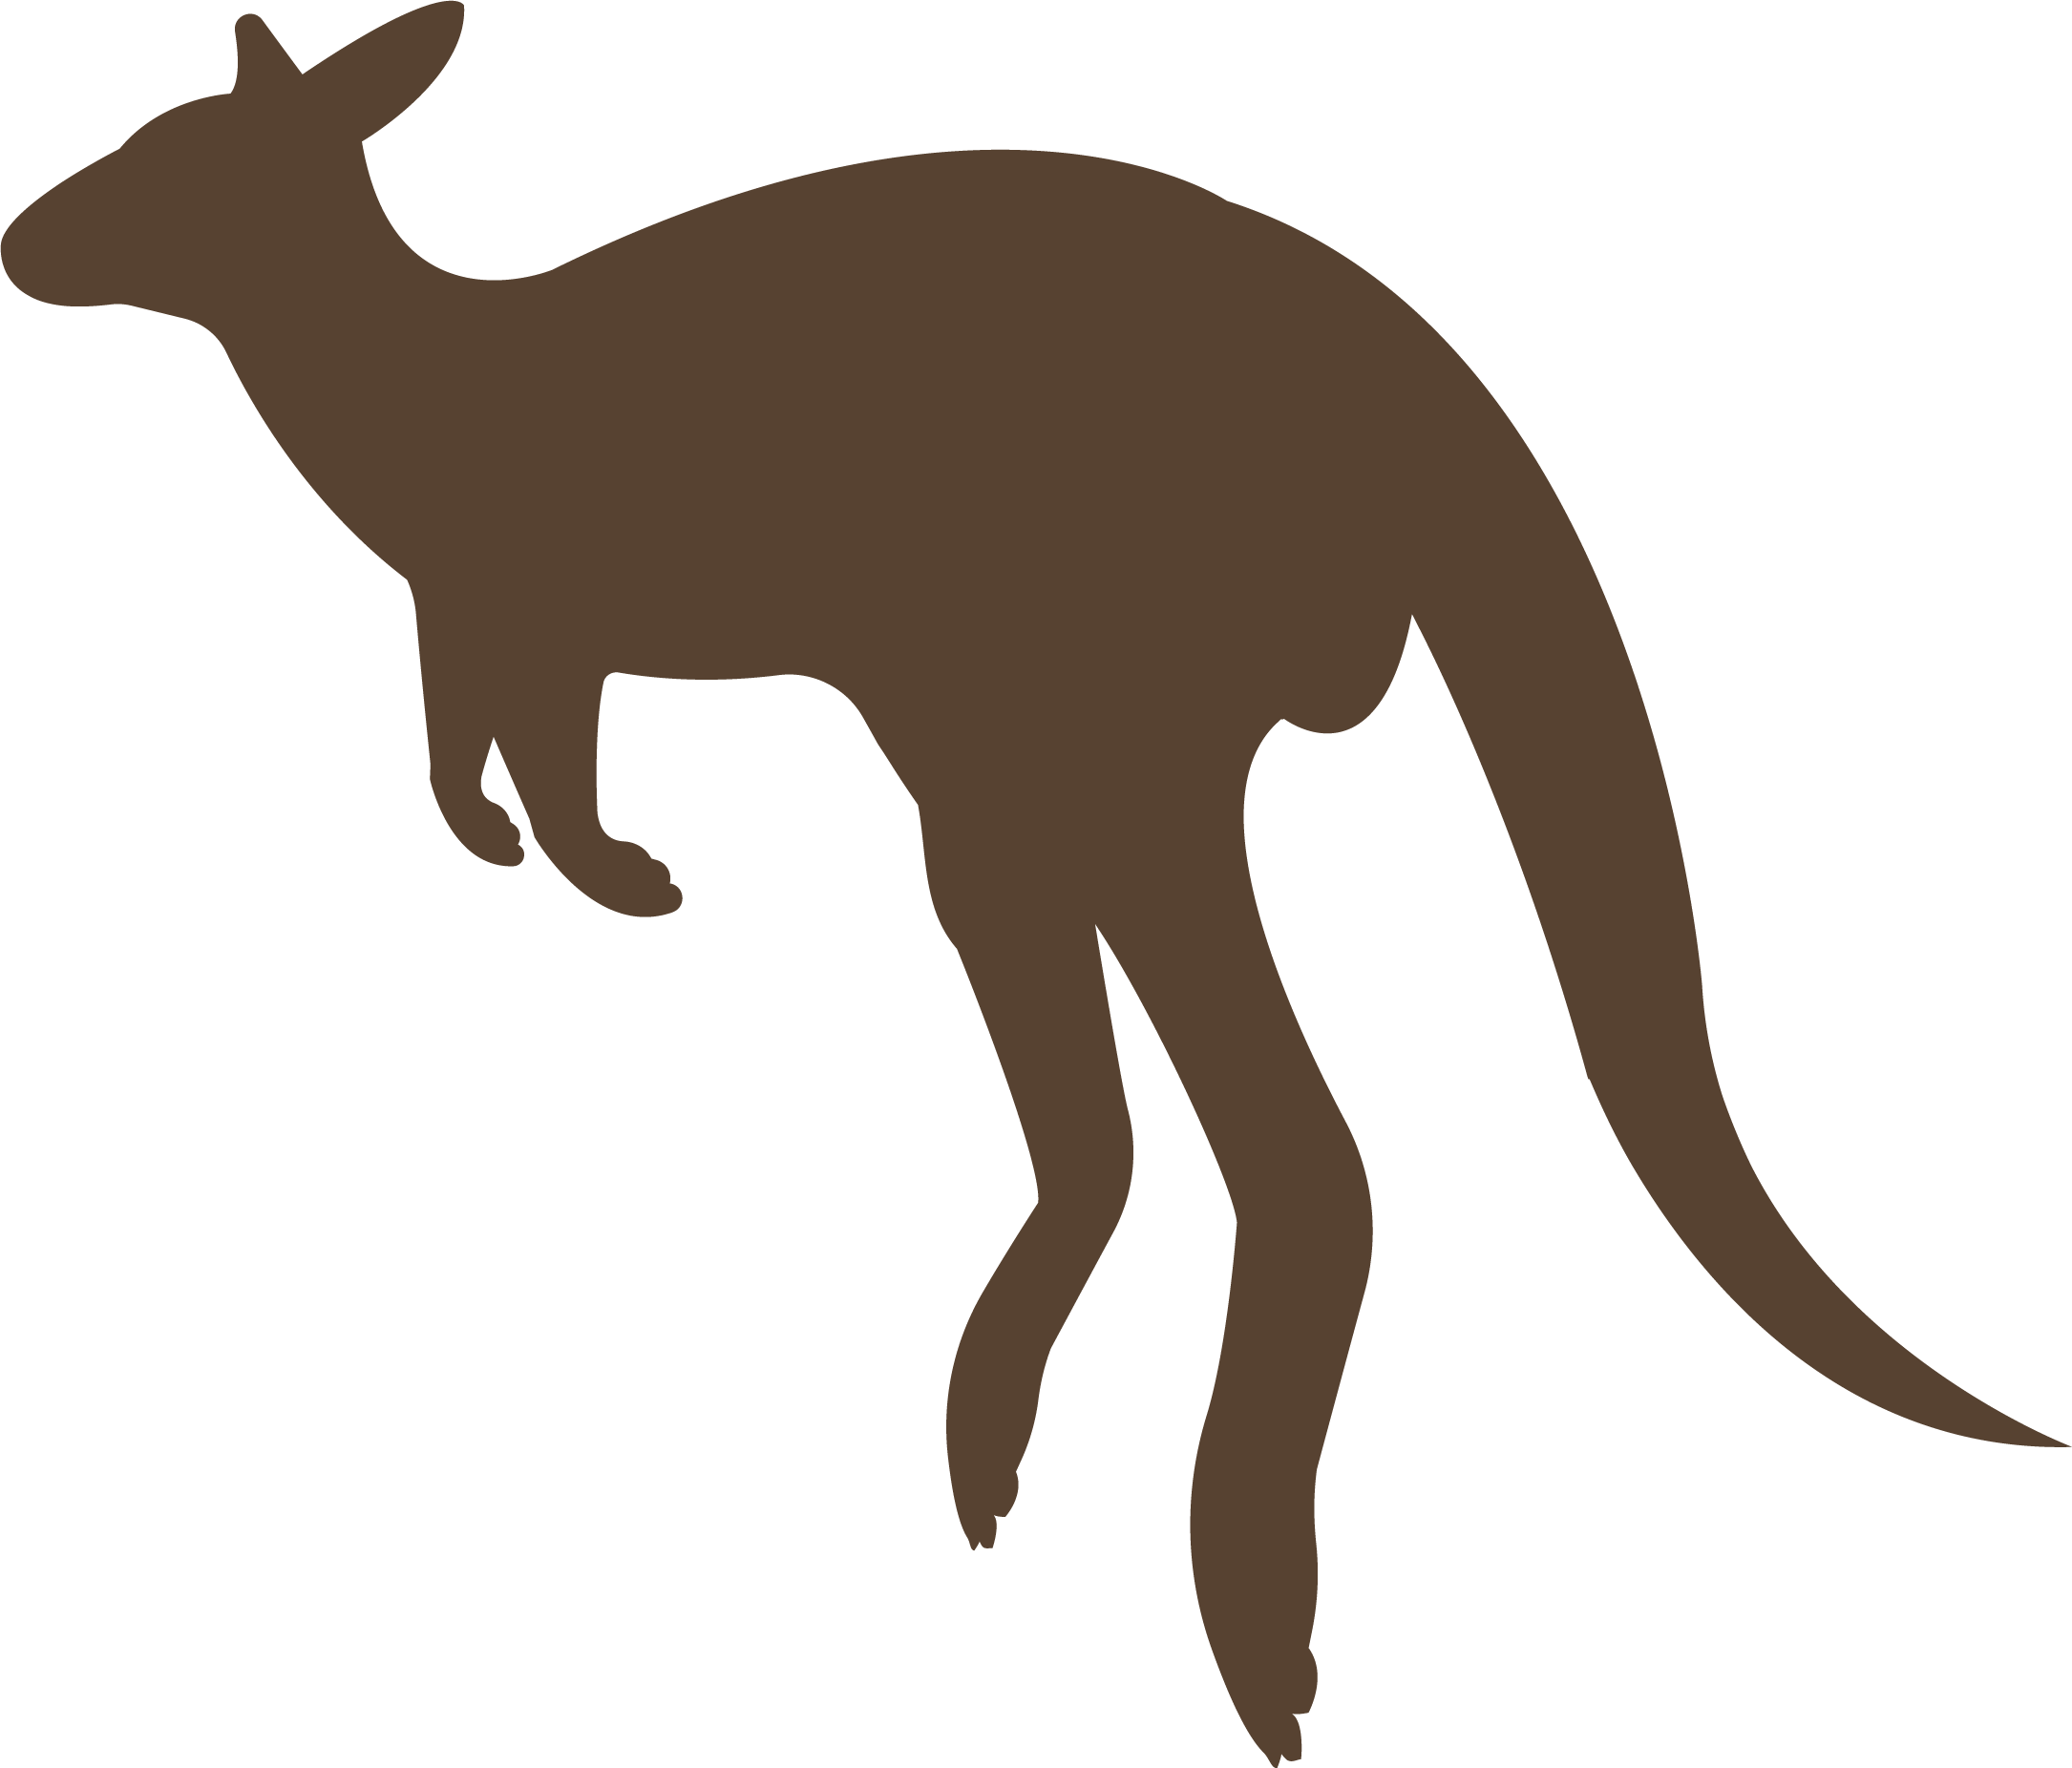 Share This Article - Kangaroo (2170x1852)